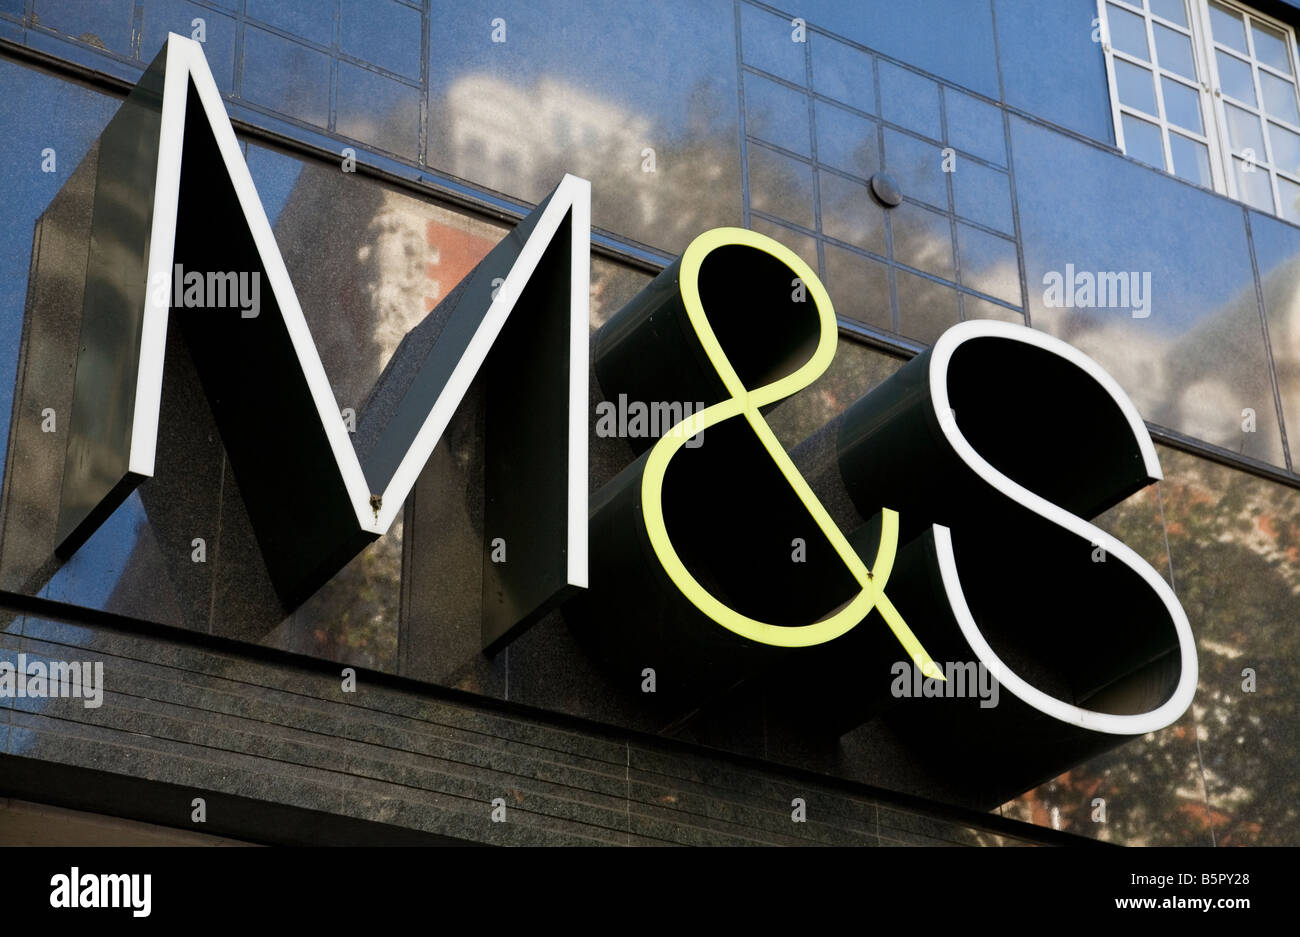 М s ru. S&M. M&S картинки. Эстетичные буквы m s°́. Здание в форме буквы м.